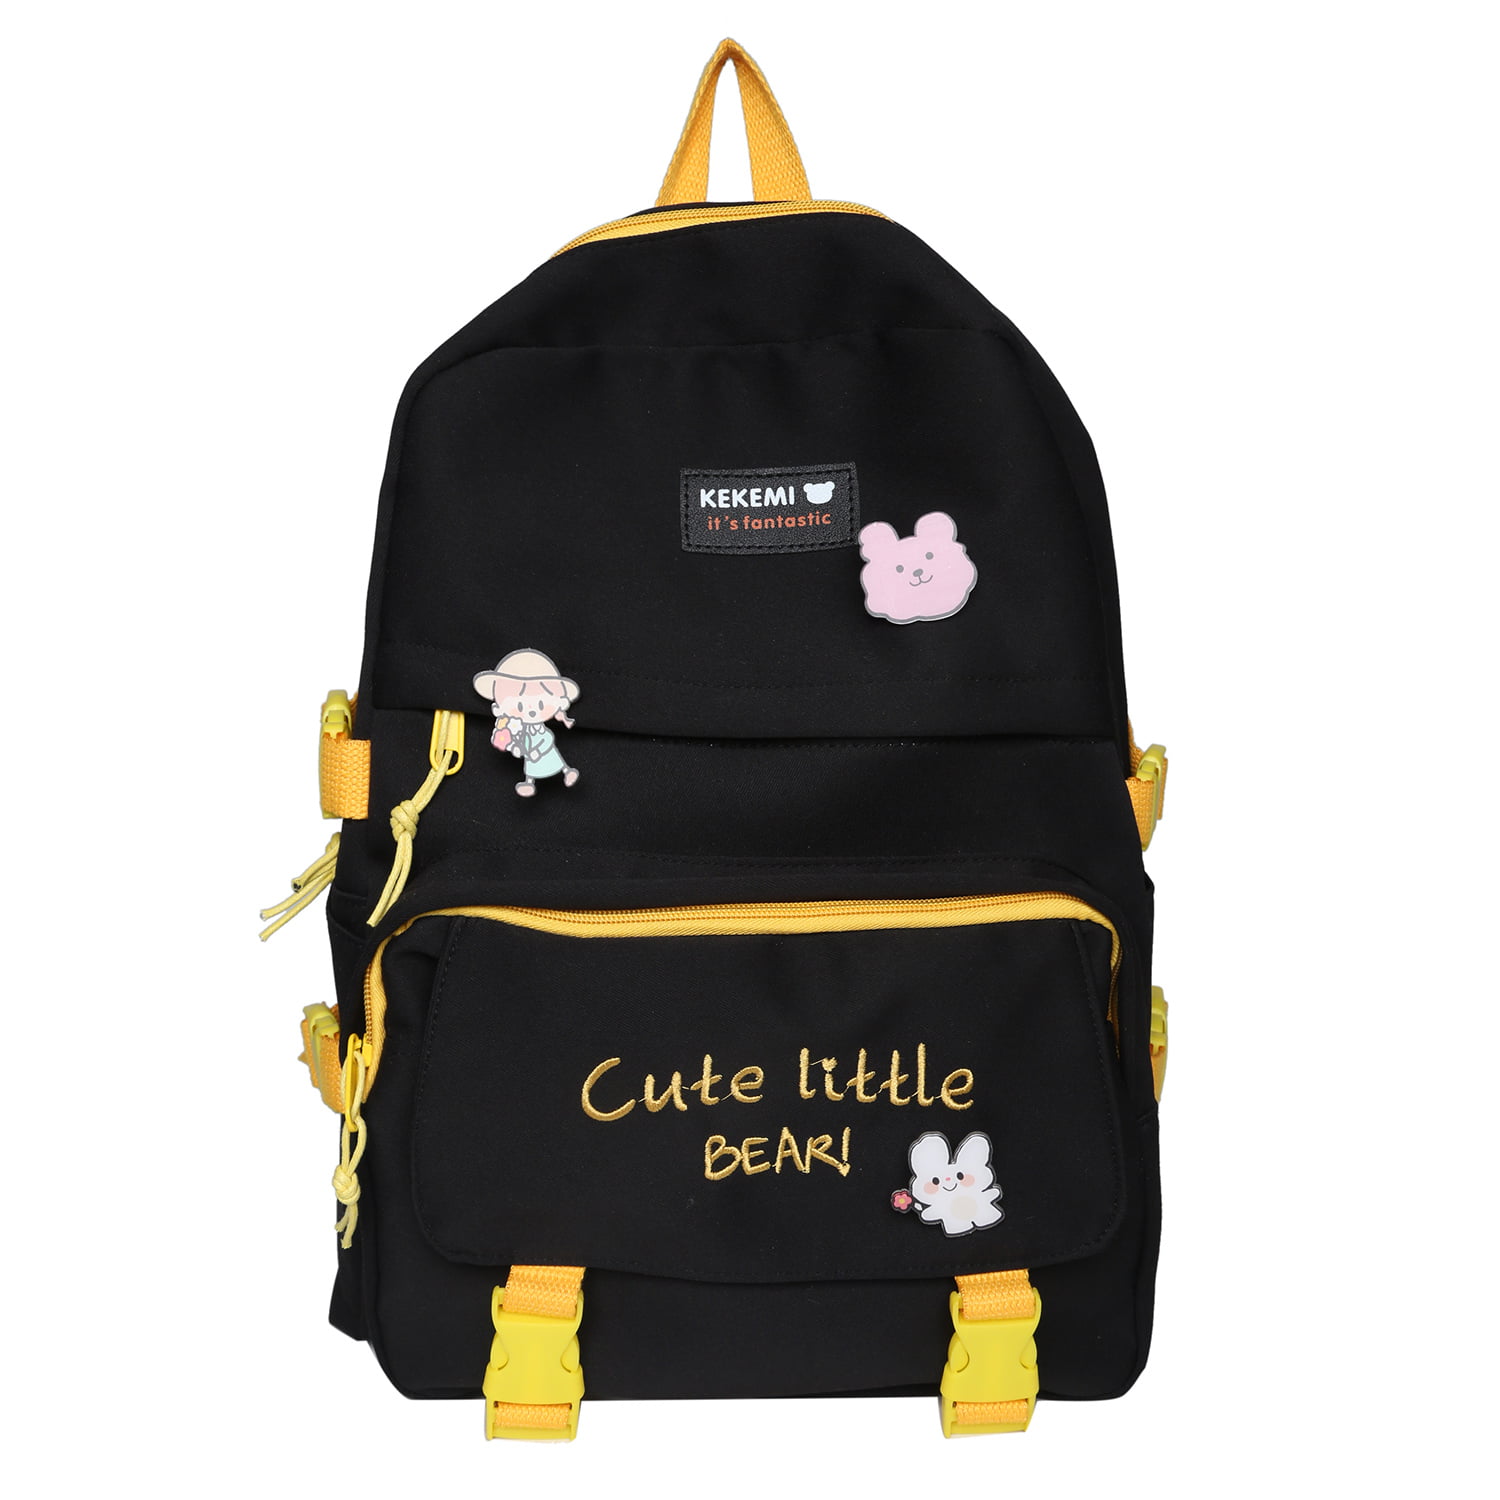 Unisex School Backpack,Colorful Tie Dye Casual Lightweight Travel Daypack Durable College Bookbag Laptop Bag Shoulder Bag 